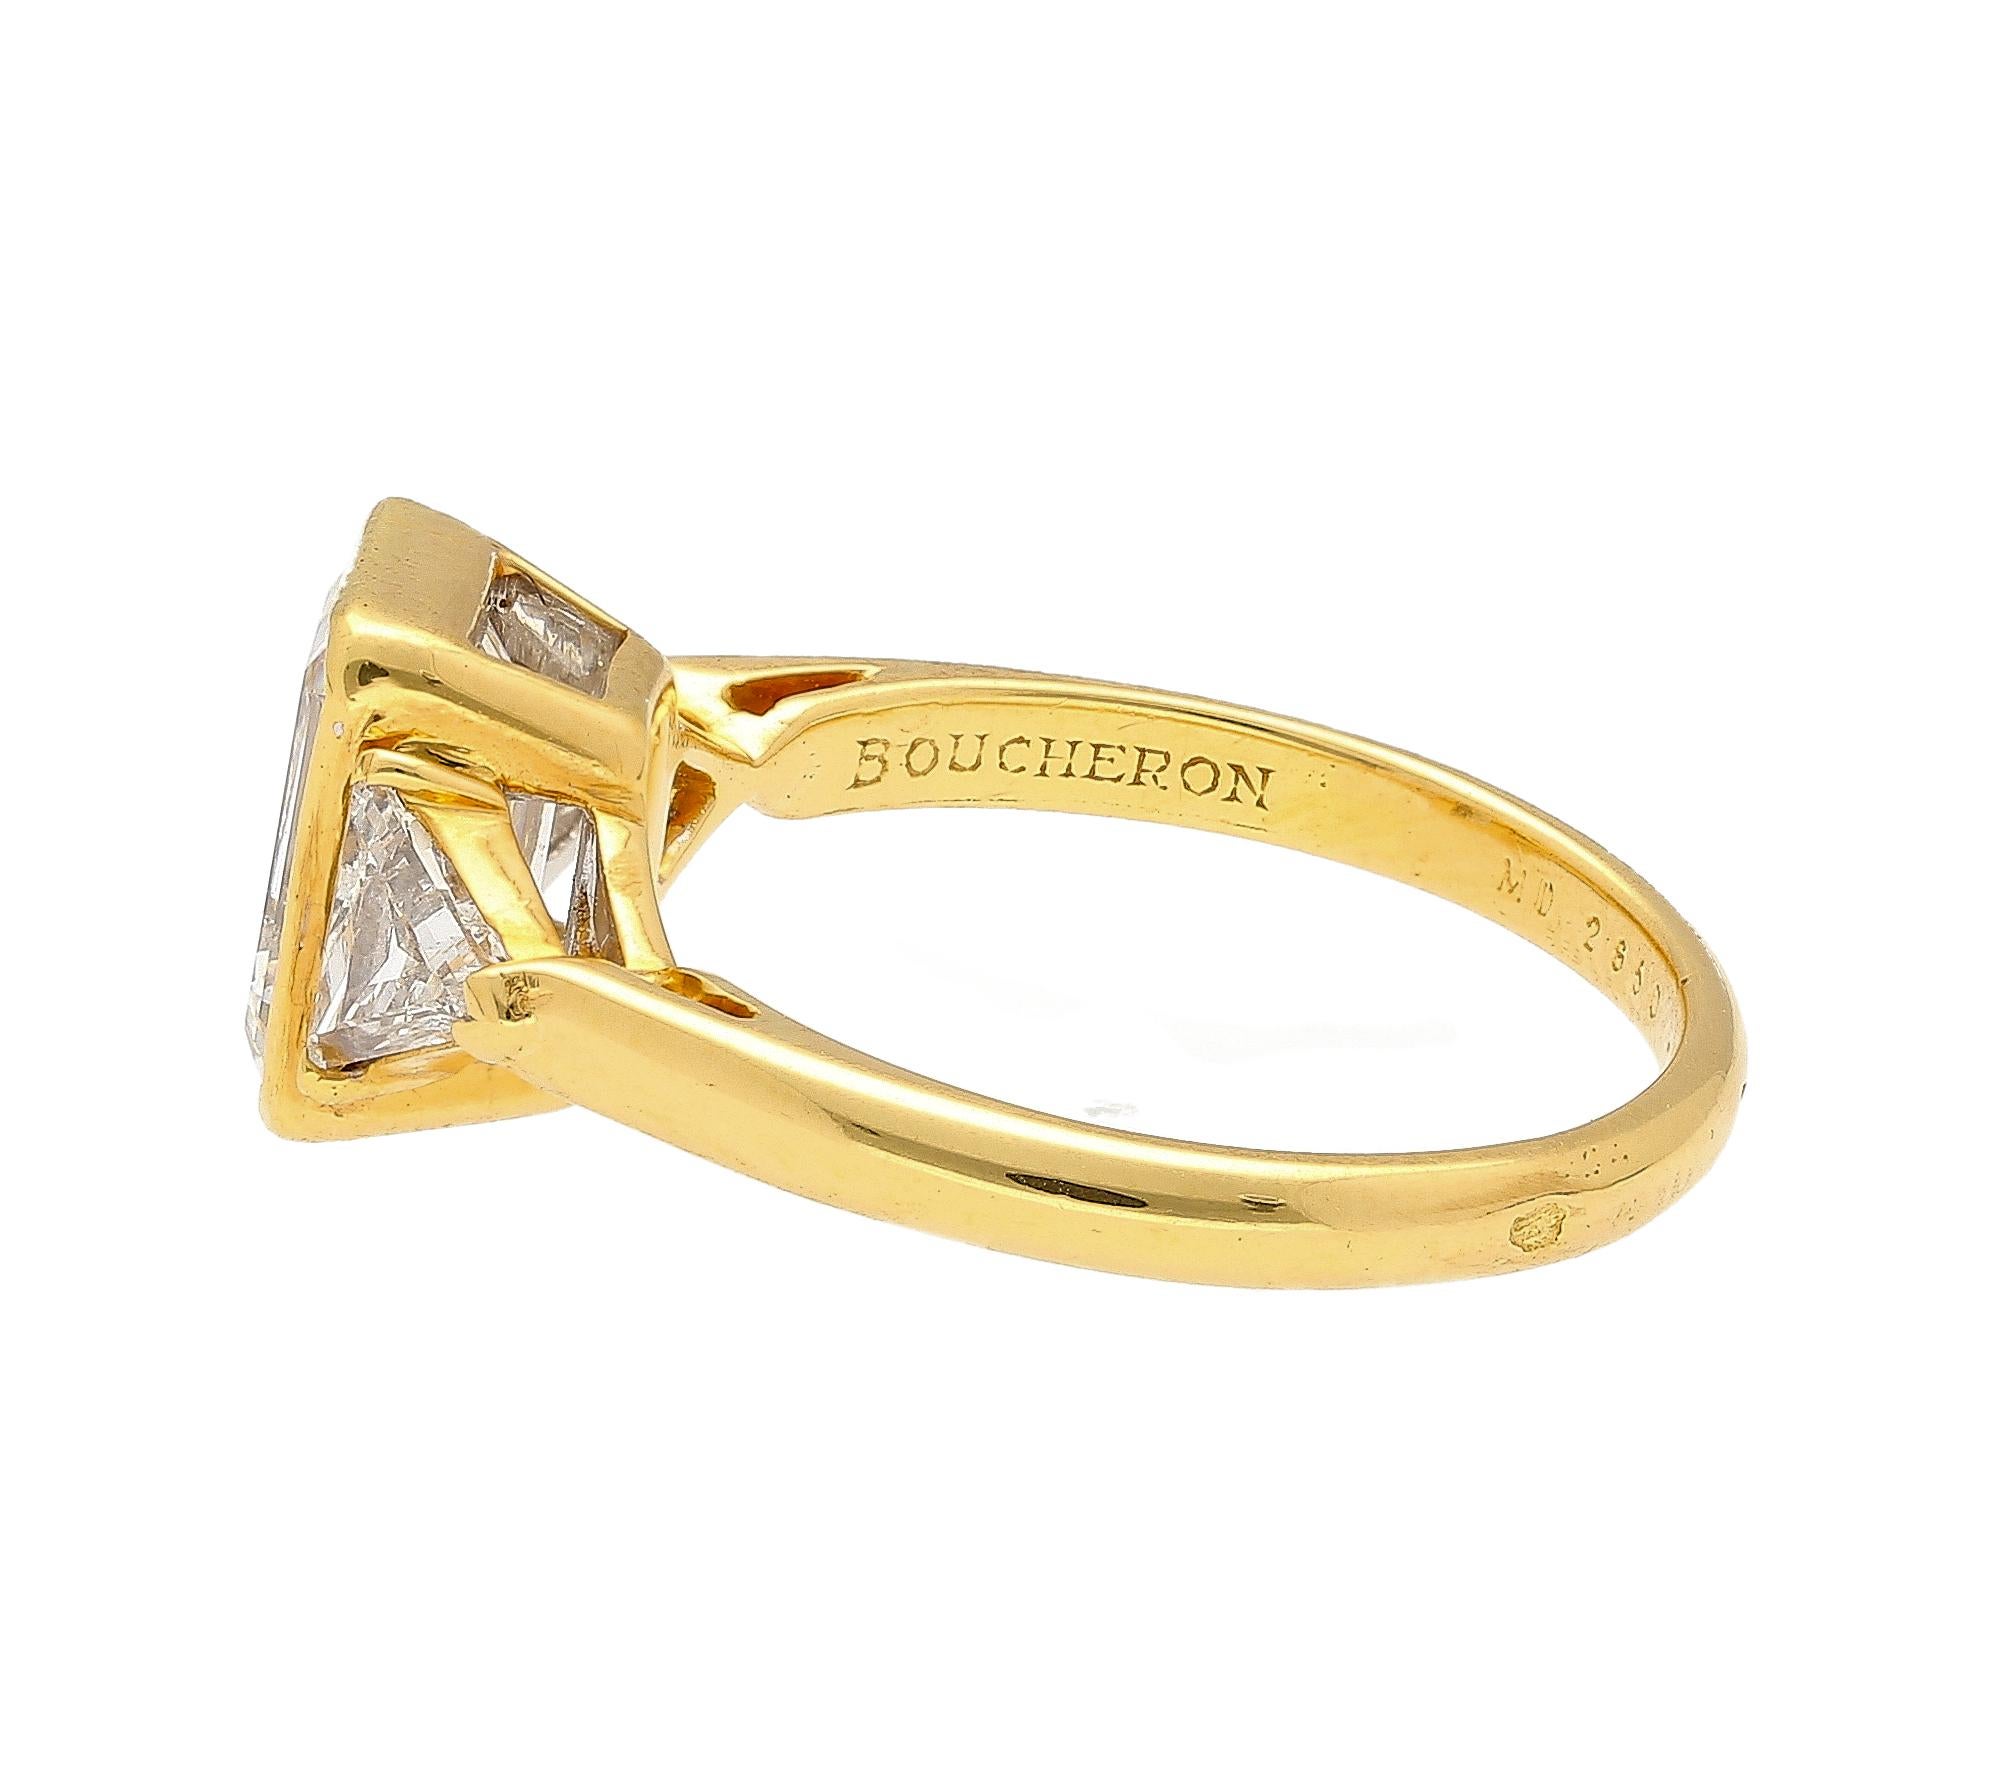 2.09 carat diamond ring